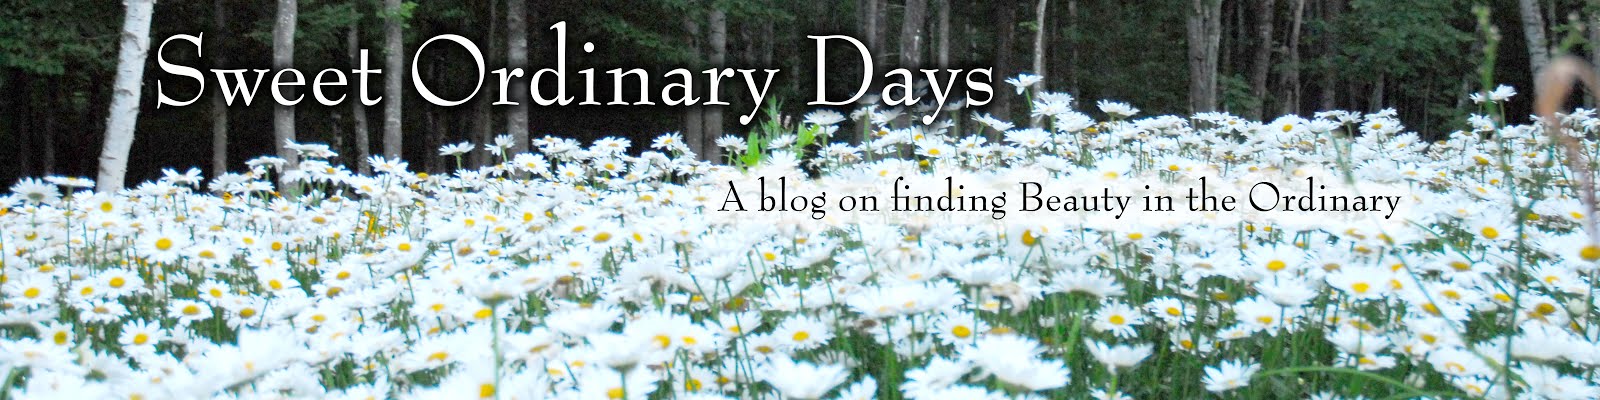 Sweet Ordinary Days Blog